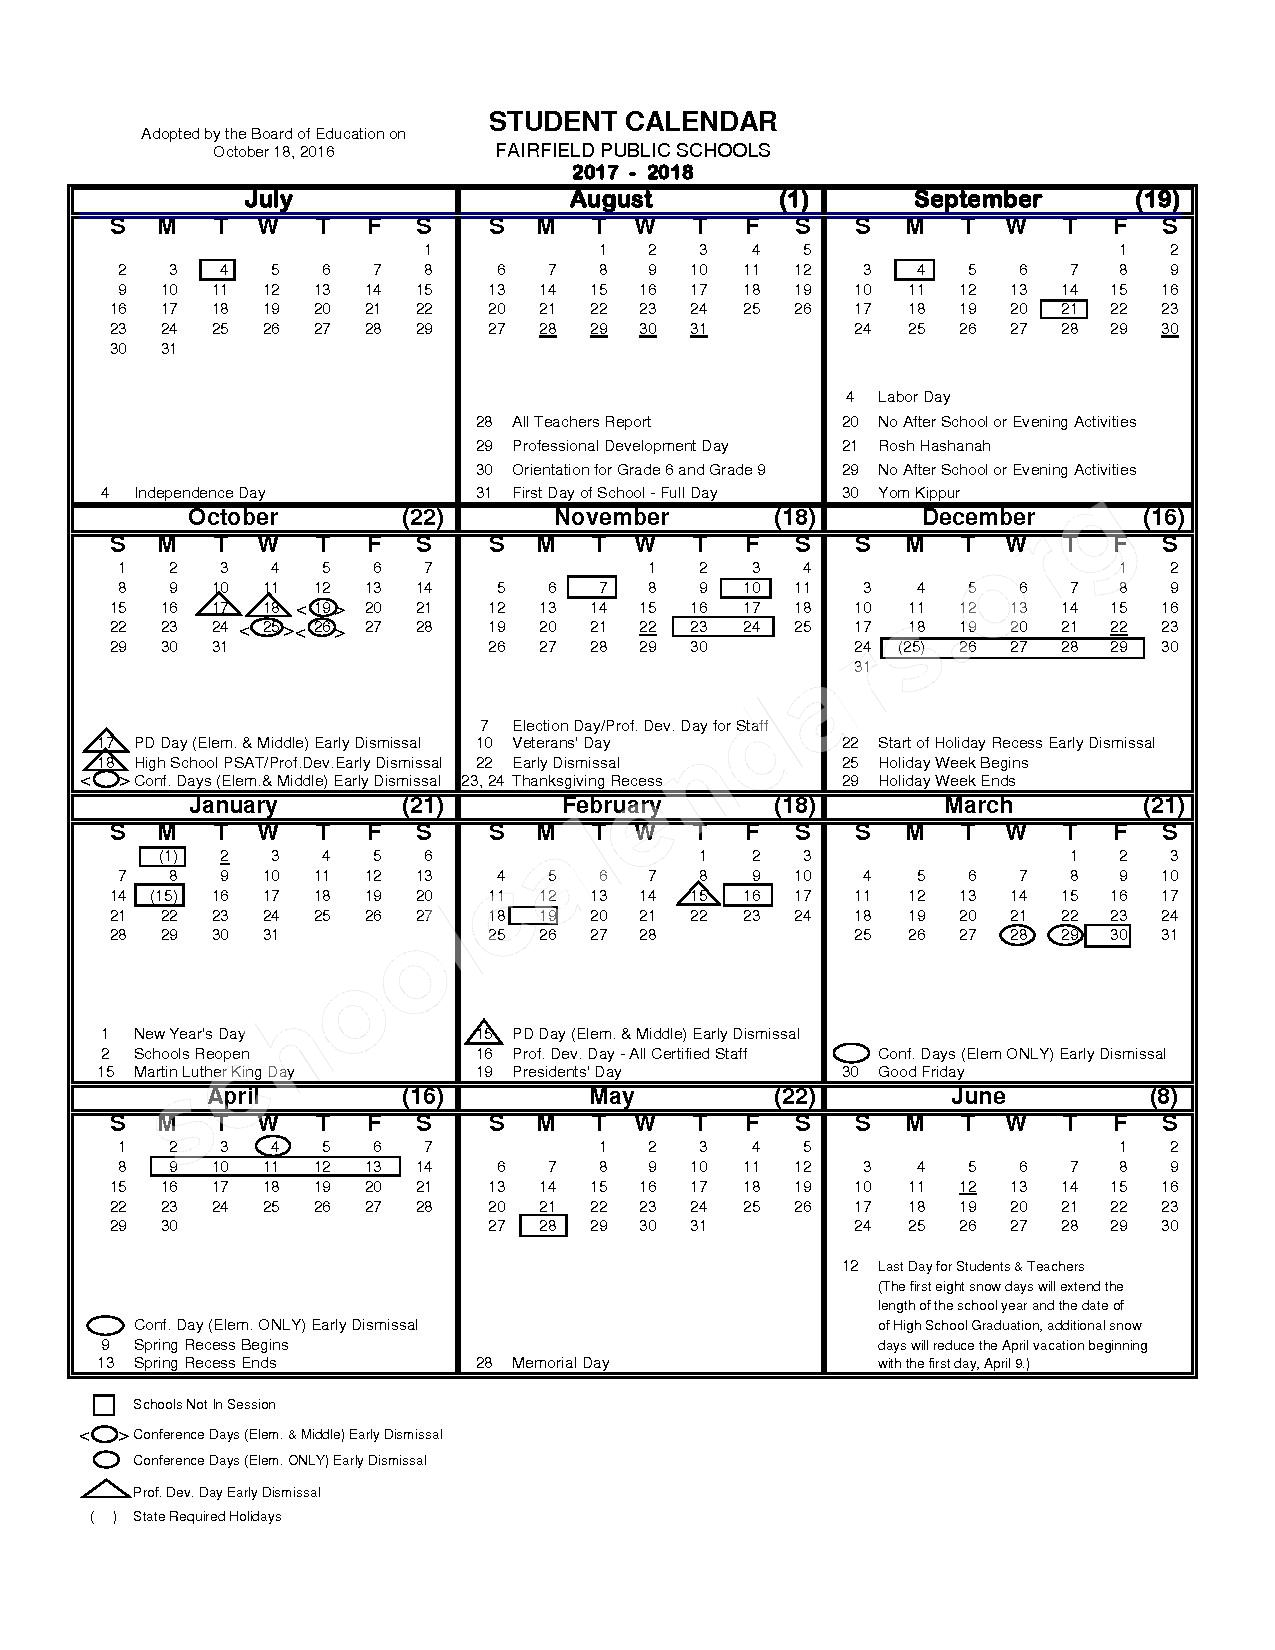 Fairfield Public Schools Calendar 2023 Schoolcalendars net